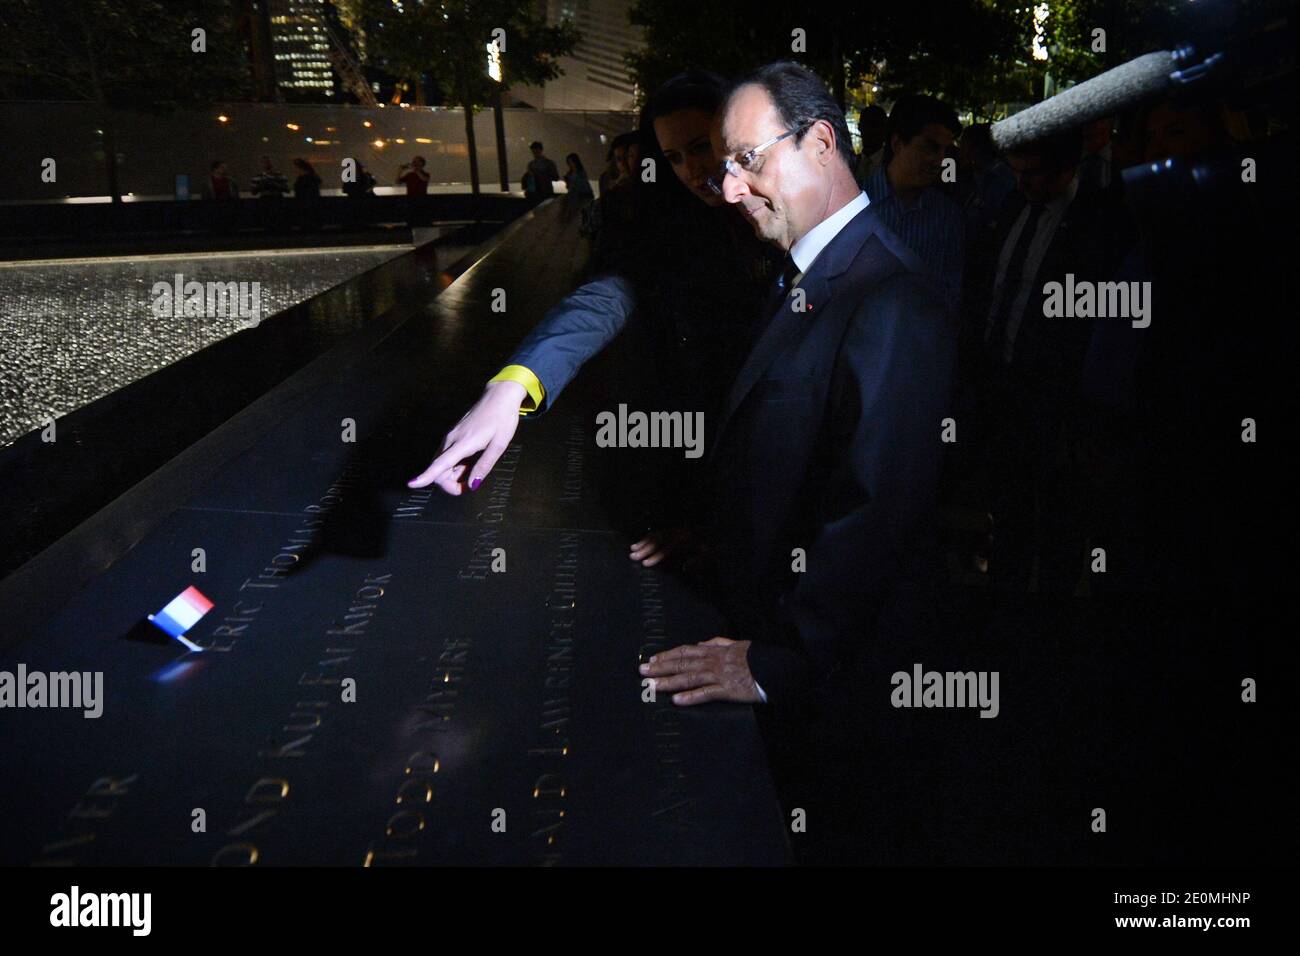 French President Francois Hollande takes a tour of Ground Zero 911 Memorial Park on September 25, 2012, New York, NY, USA. Photo by Anthony Behar/Pool/ABACAPRESS.COM Stock Photo